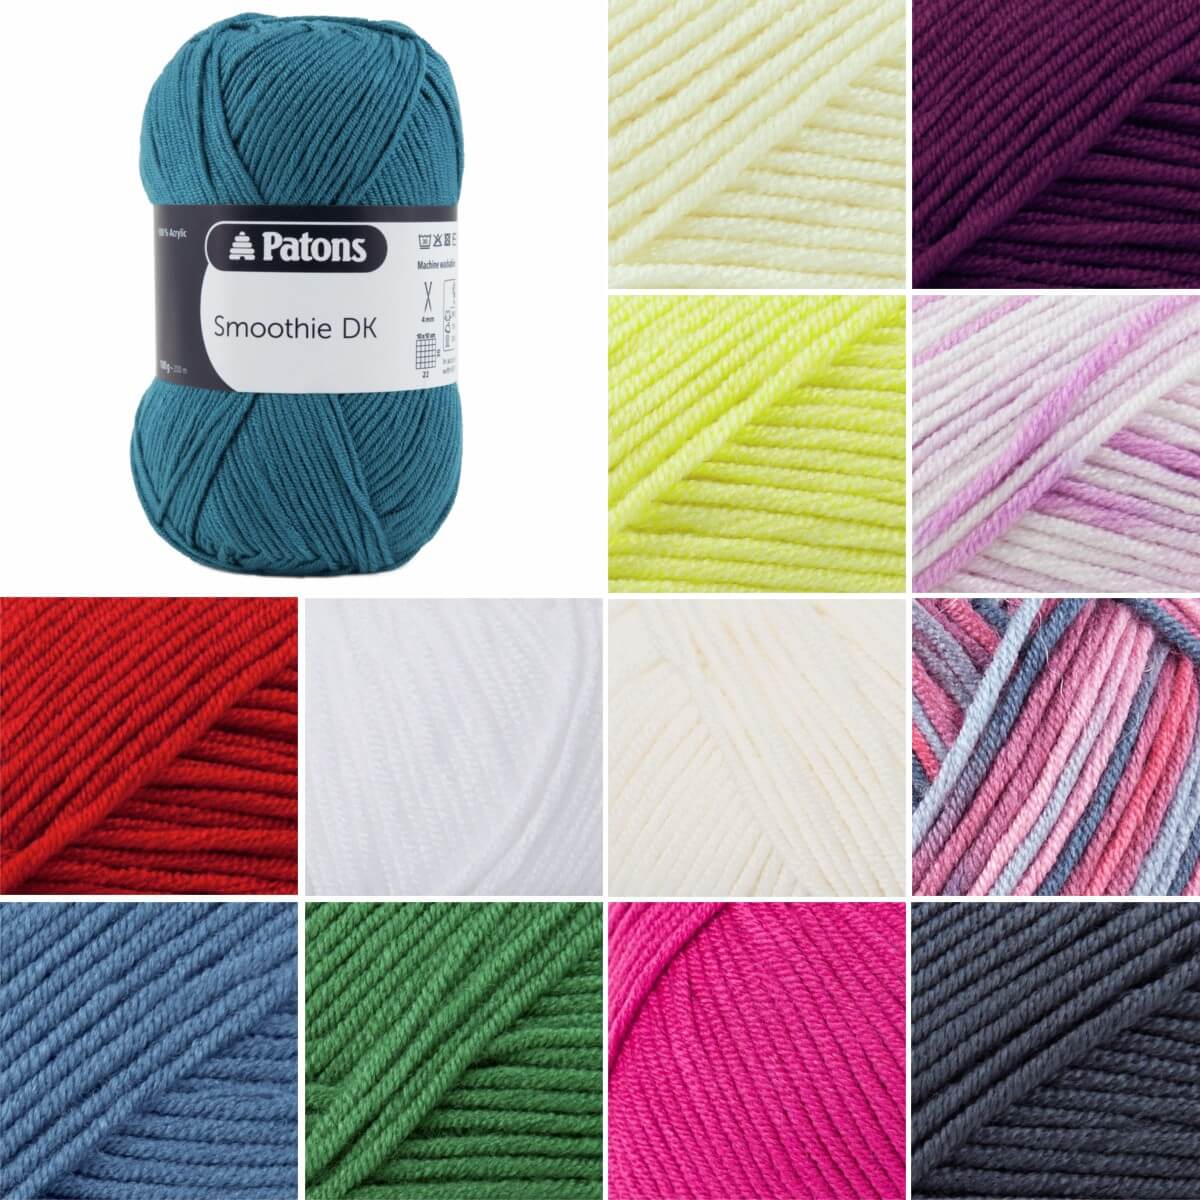 1010 Lime Patons 100% Acrylic Smoothie DK Yarn Wool Knitting Crochet 100g Ball Double Knitting